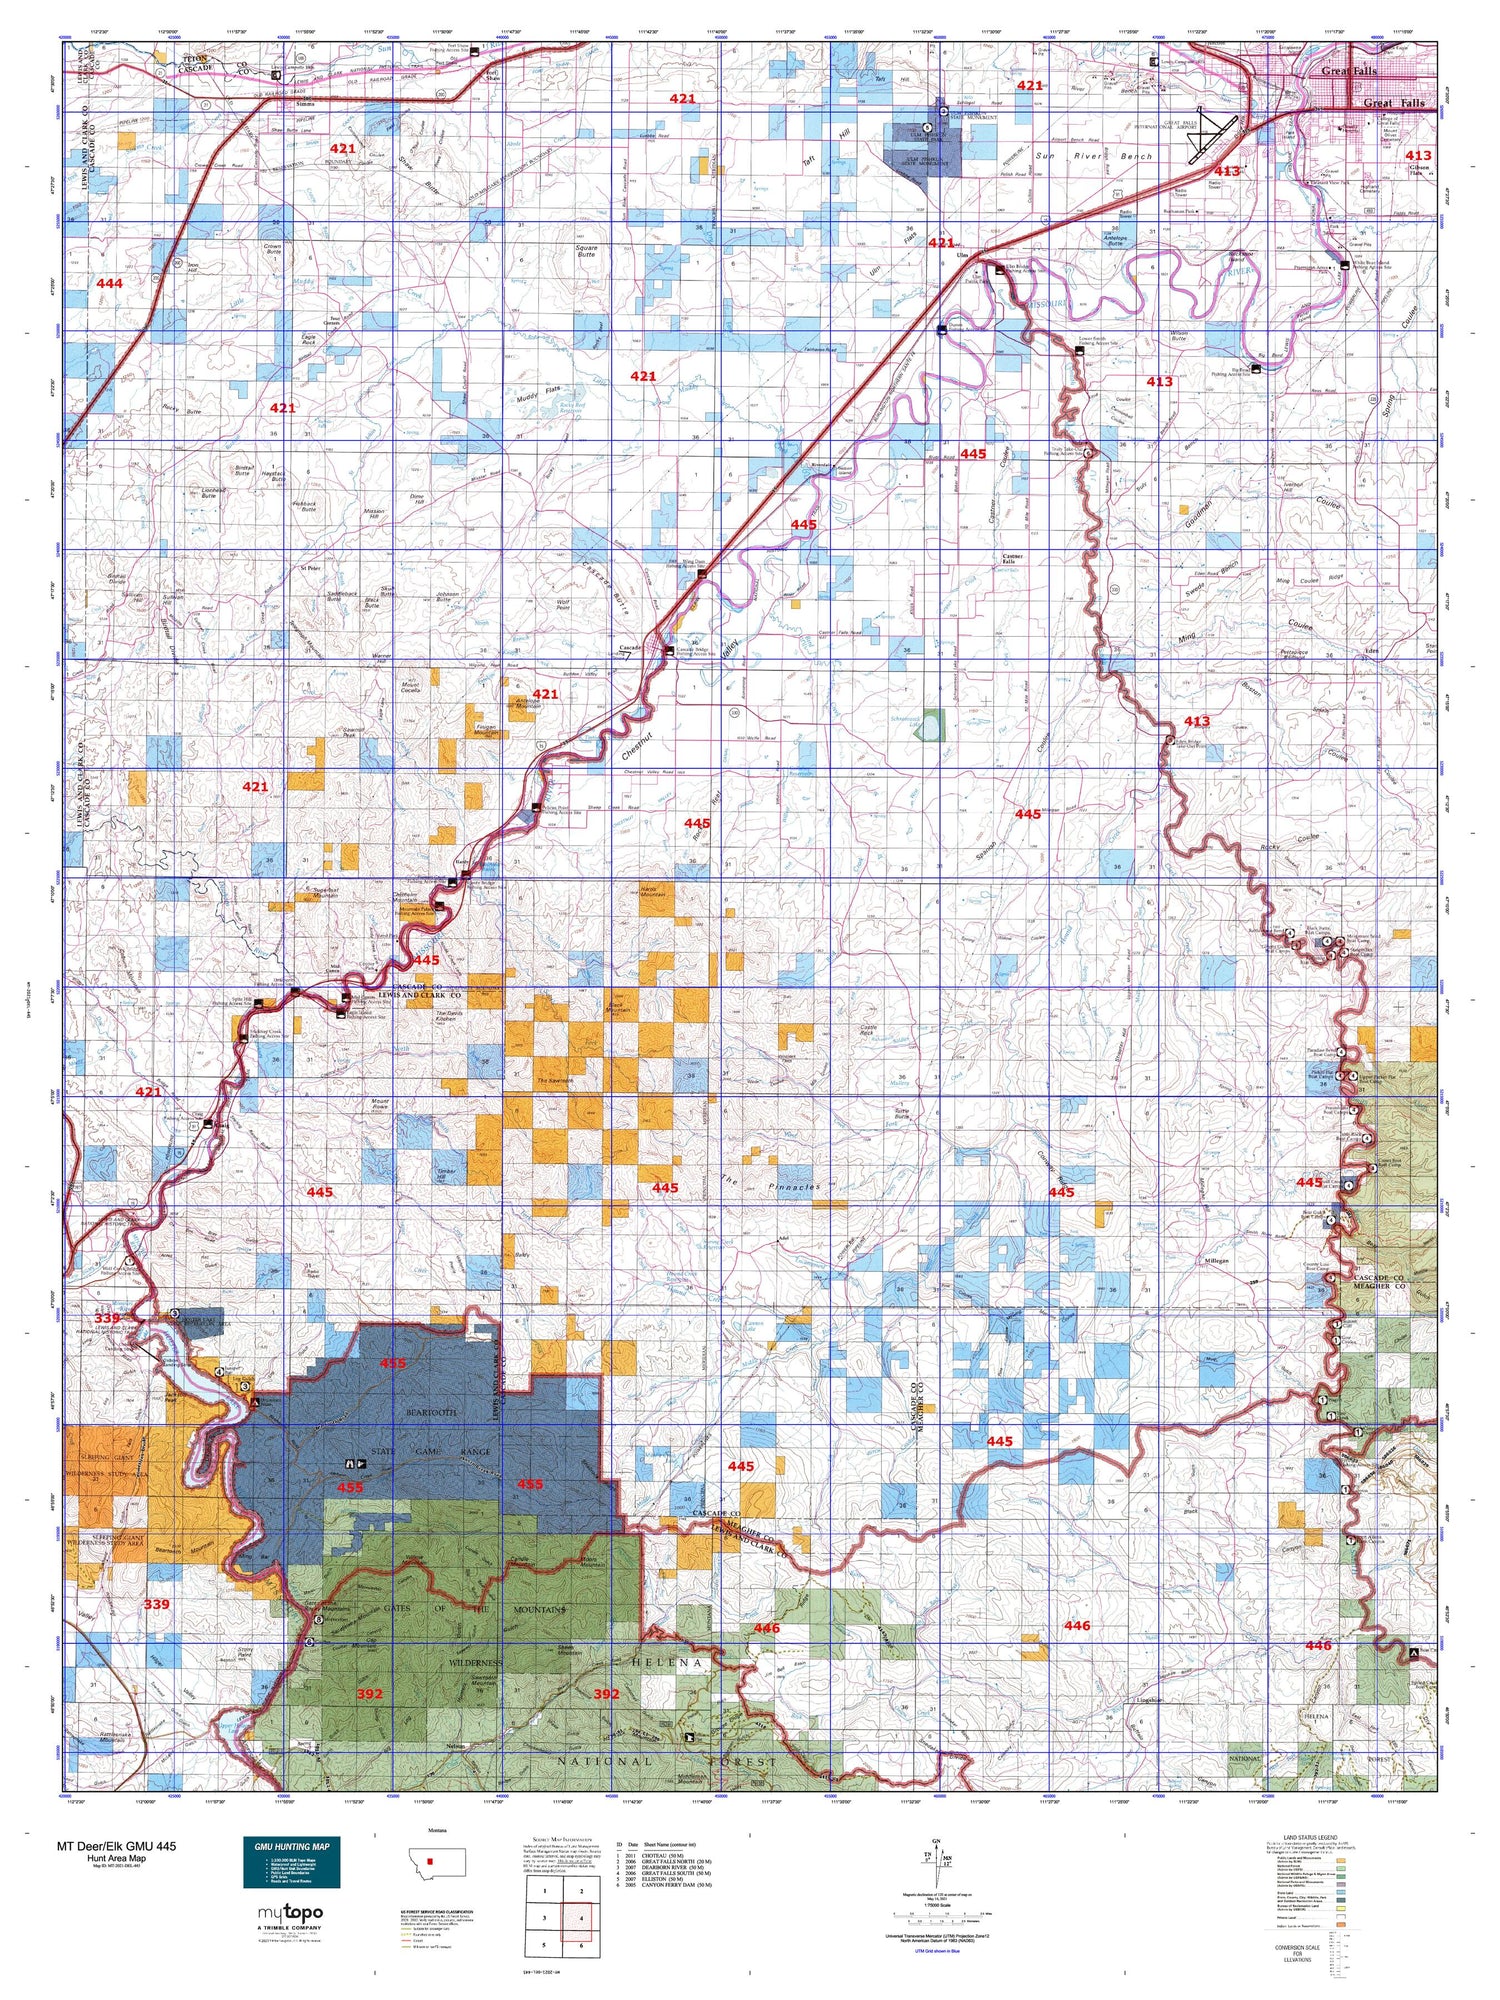 Montana Deer/Elk GMU 445 Map Image